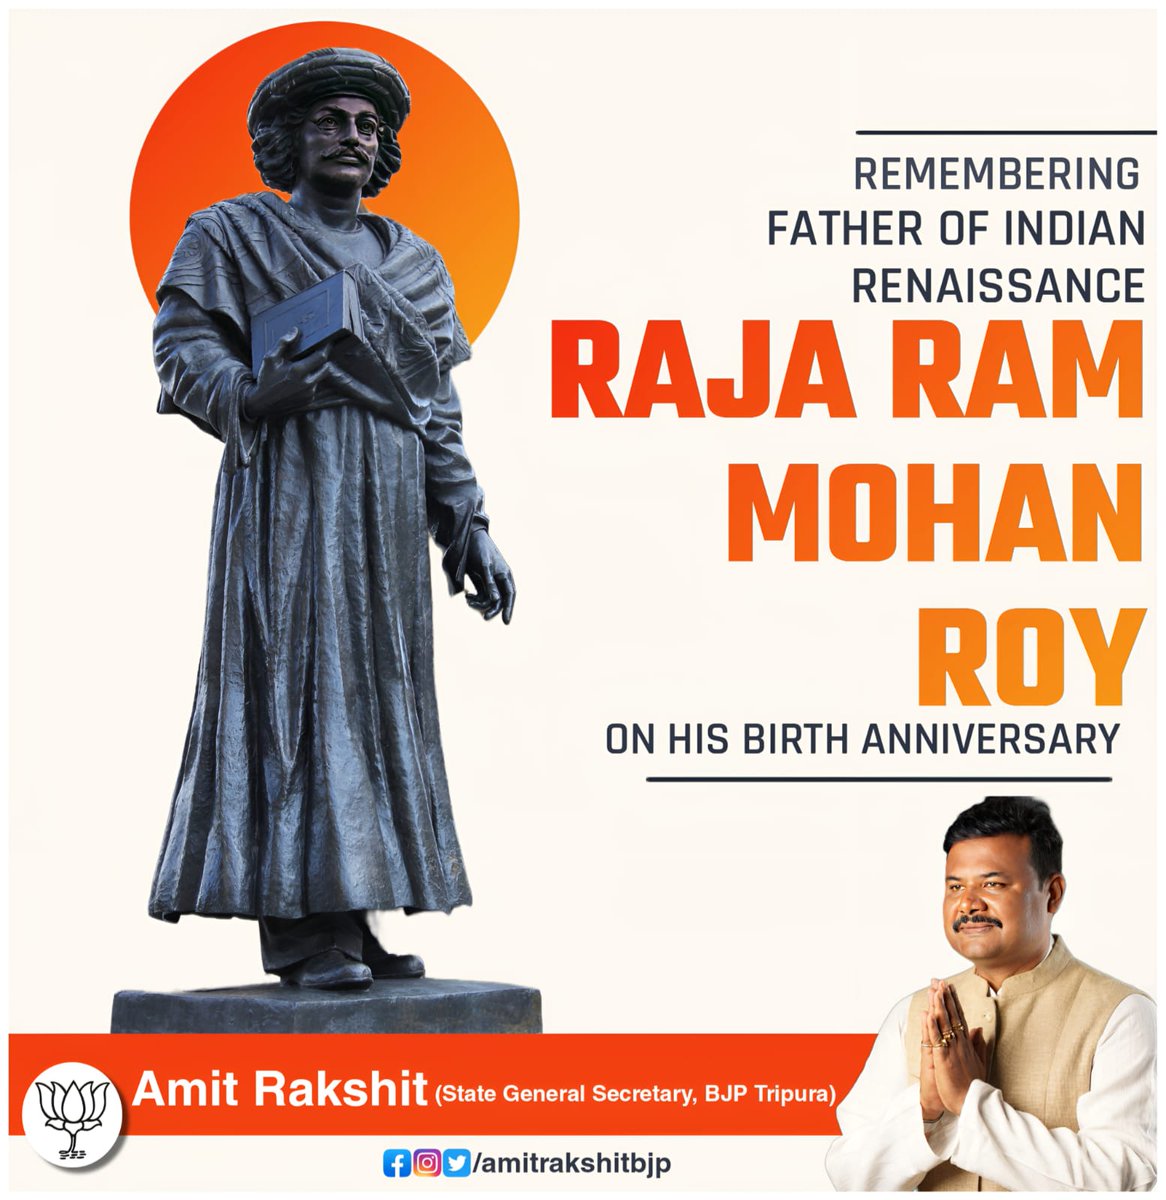 My humble tributes to the great social reformer Raja Ram Mohan Roy ji on his Jayanti.